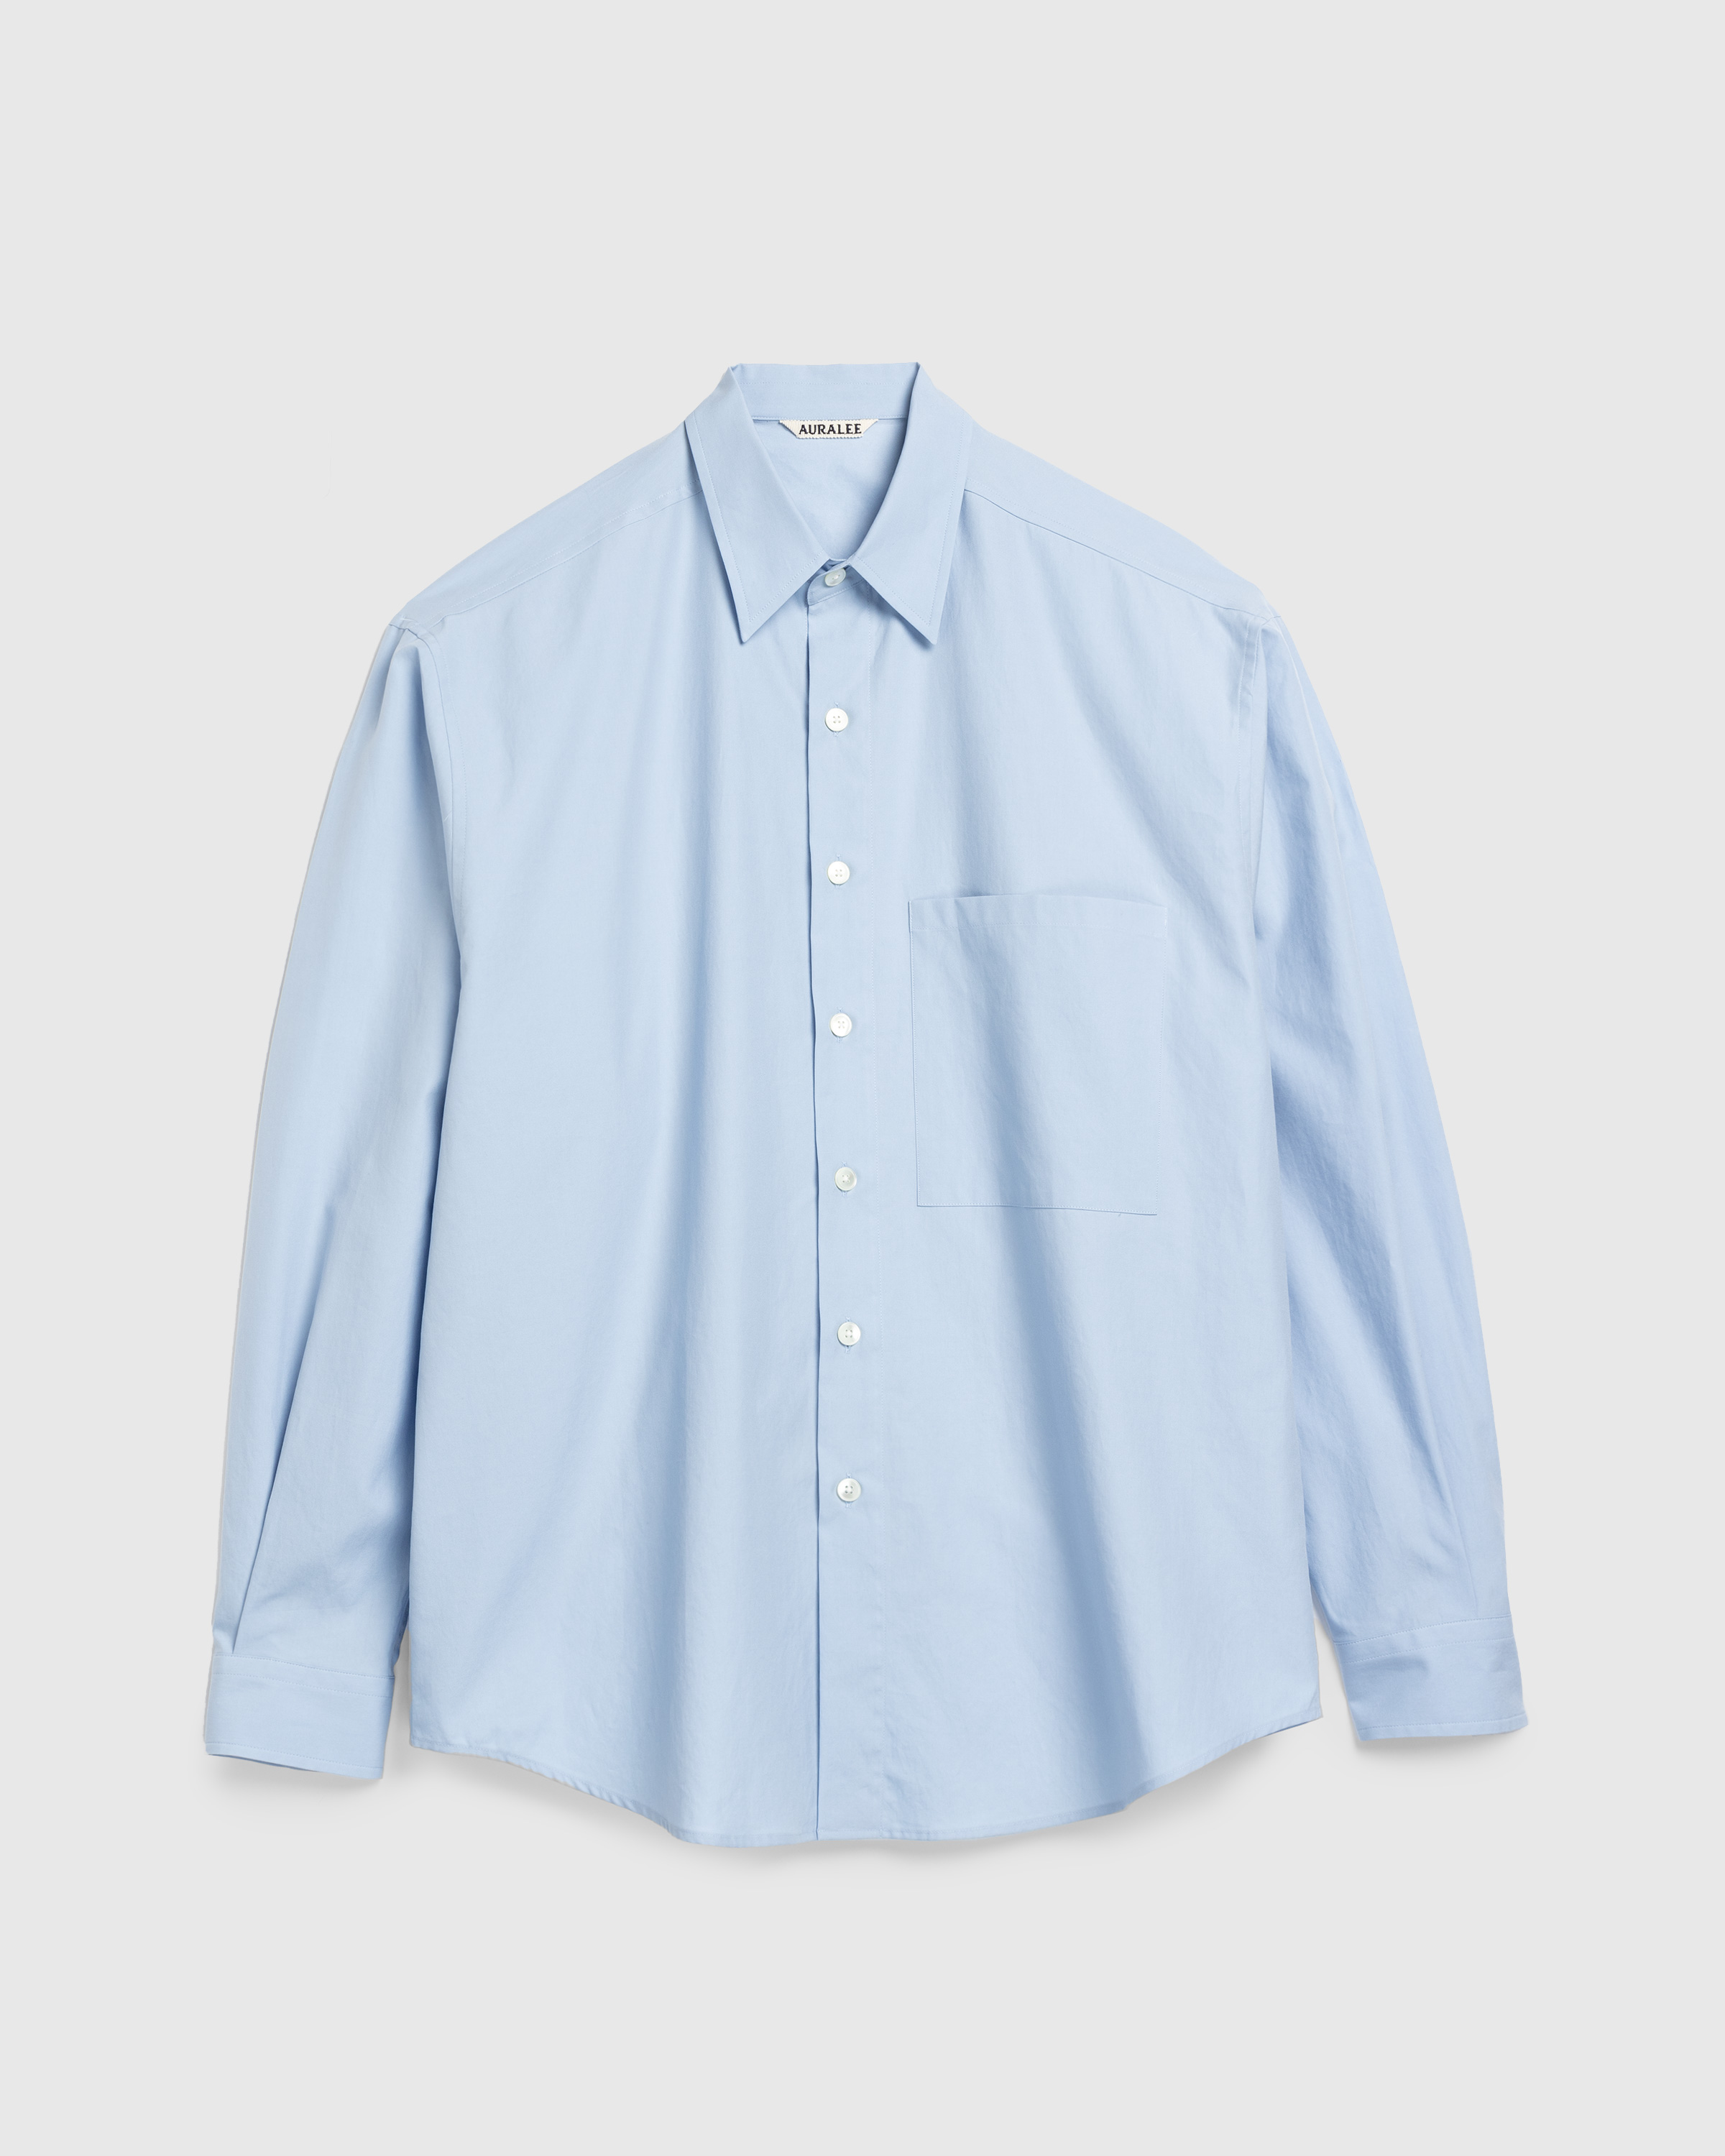 Auralee – Washed Finx Twill Big Shirt Sax Blue - Shirts - Blue - Image 1